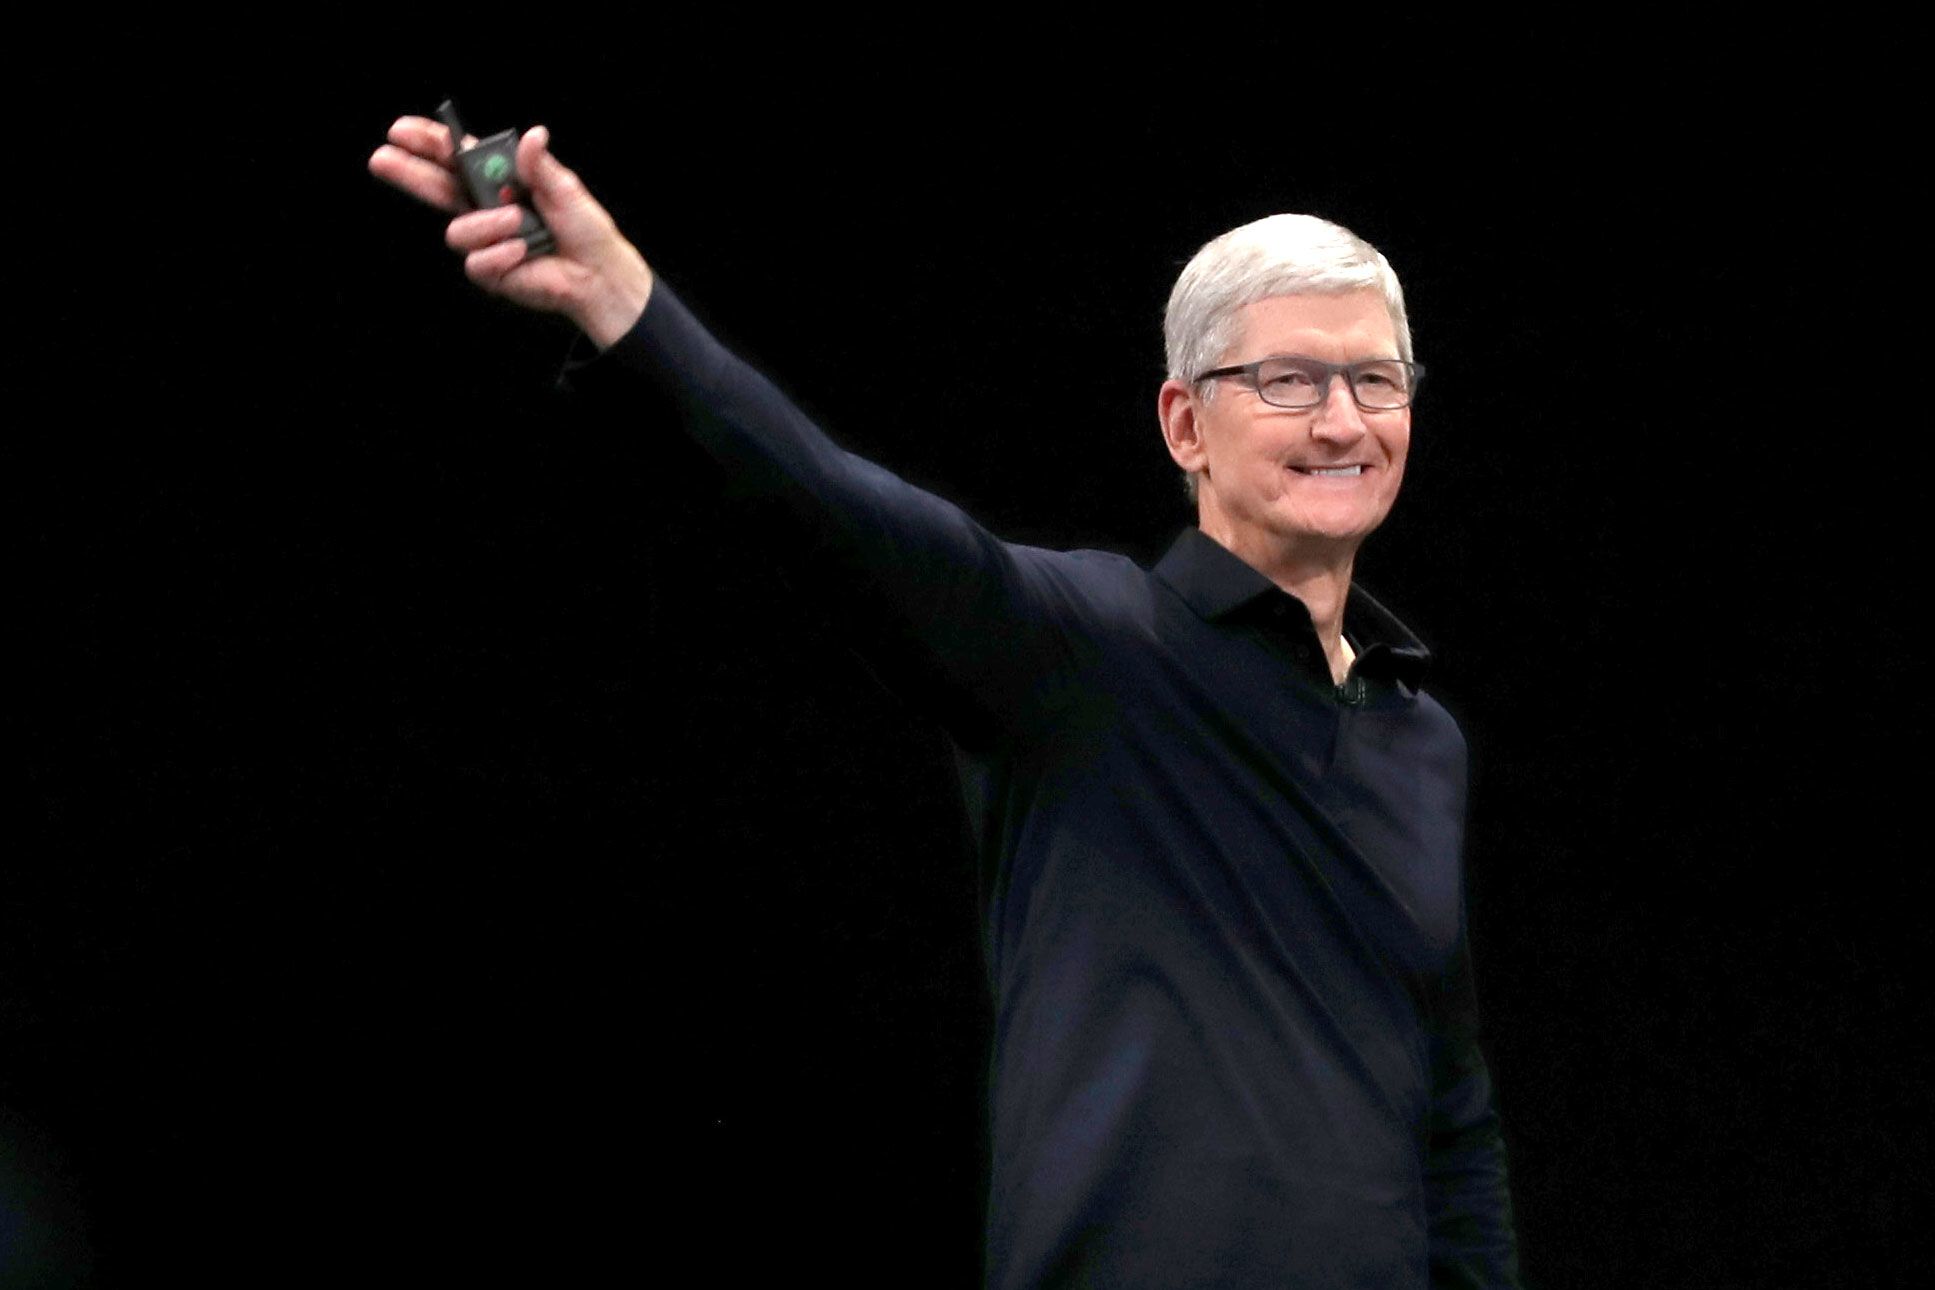 Apple now has $210.6 billion in cash on hand